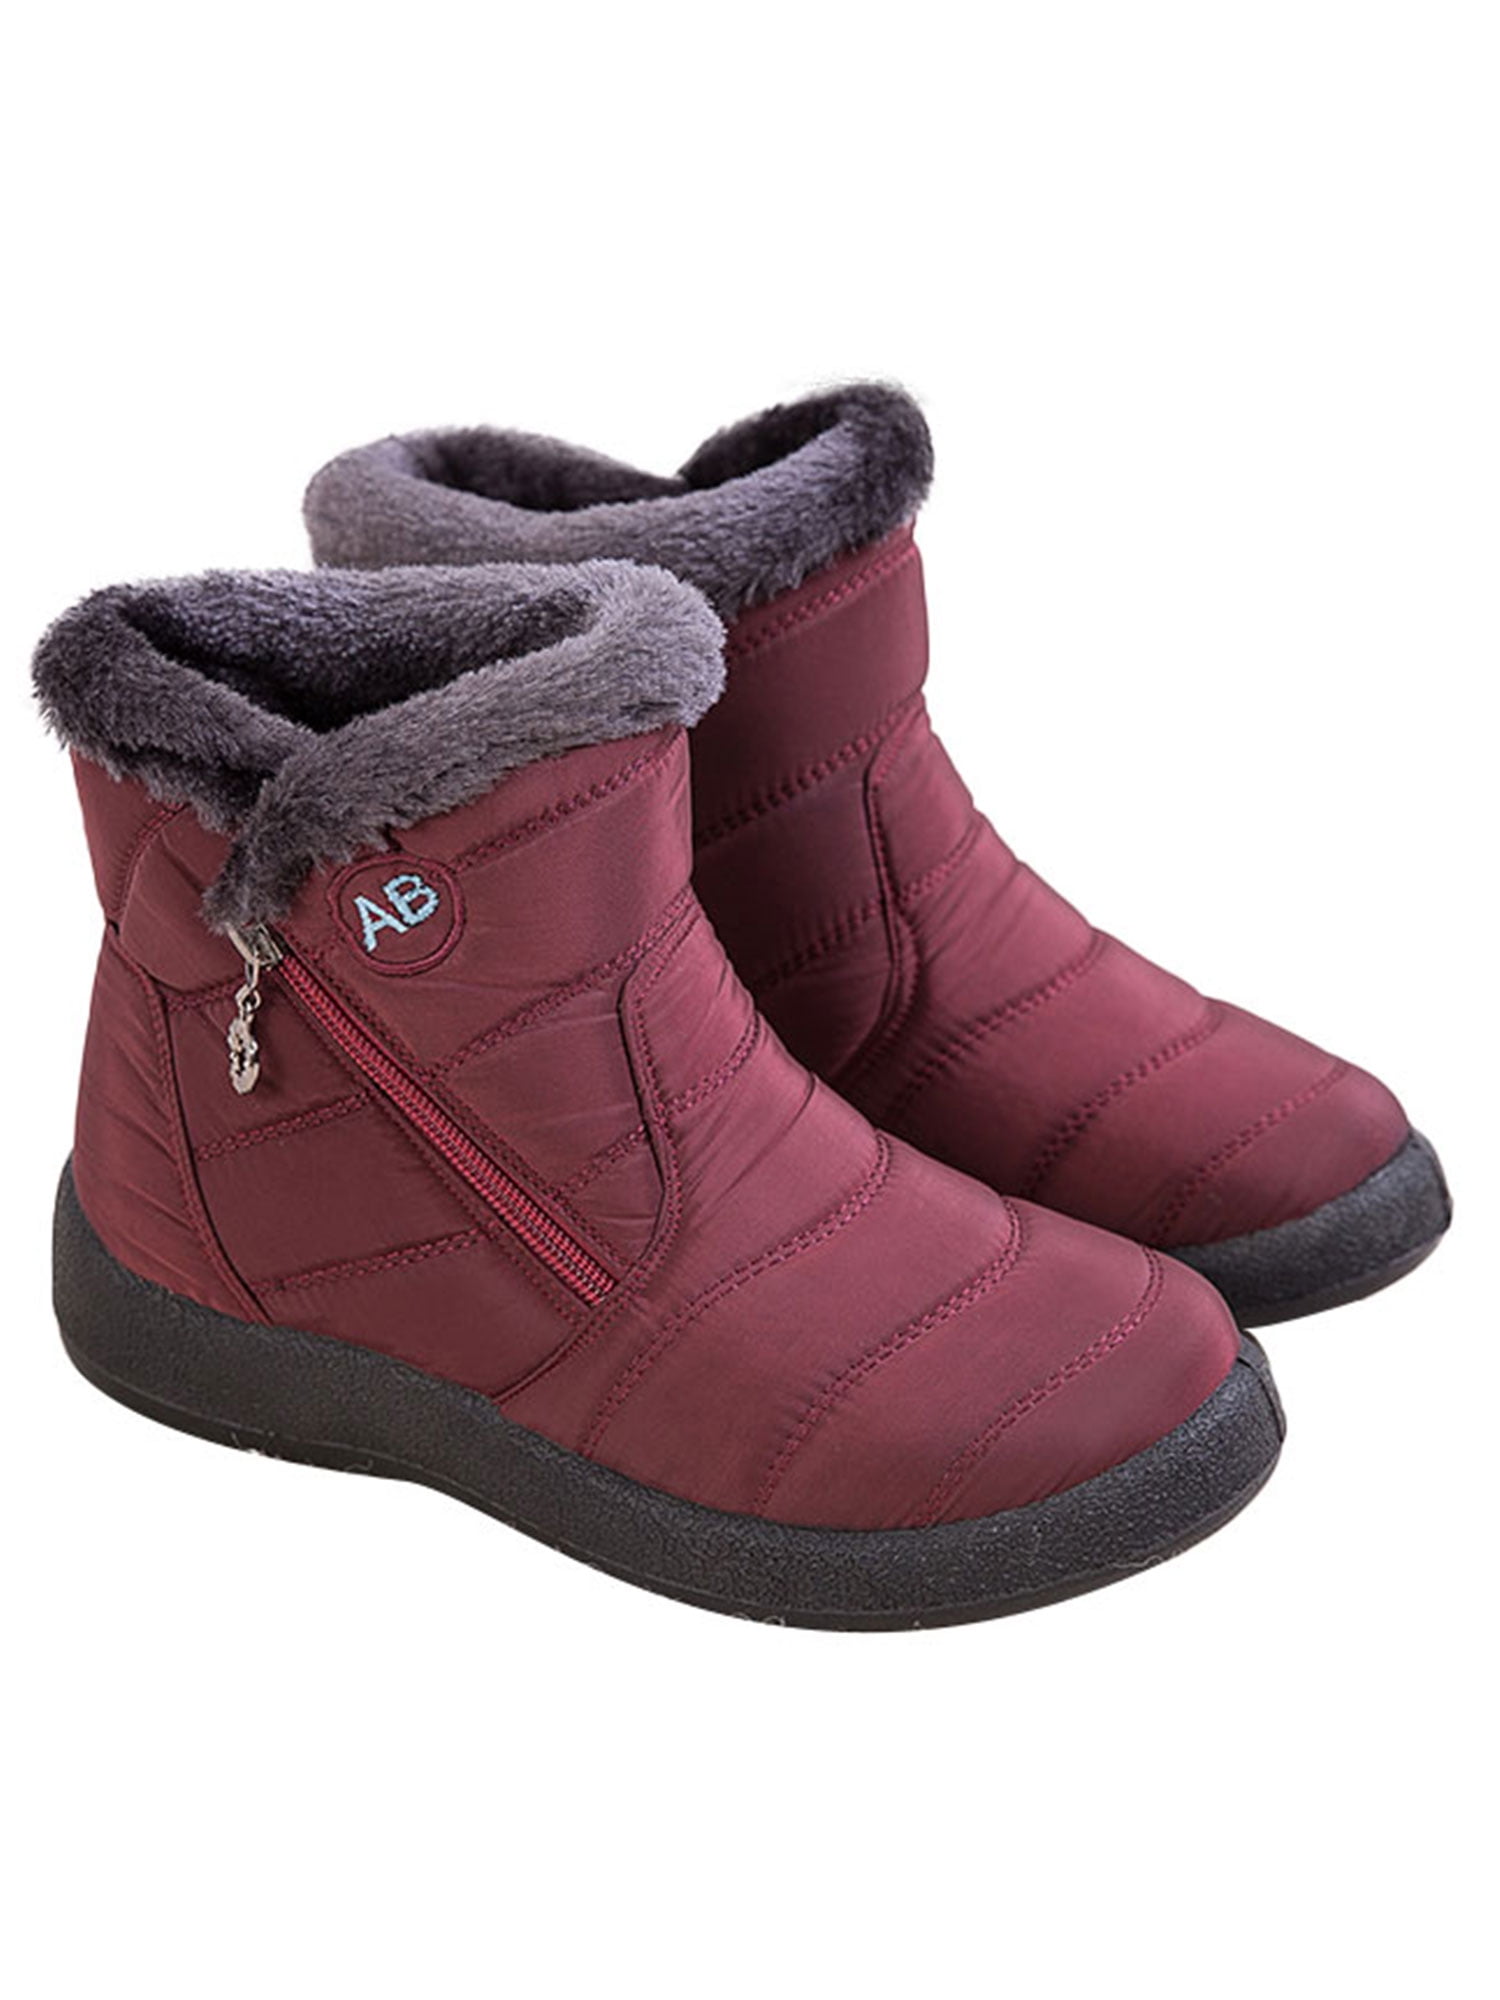 JOYBI Women Winter Round Toe Ankle Snow Boot Slip On Warm Lace Up Comfortable Waterproof Martin Boots